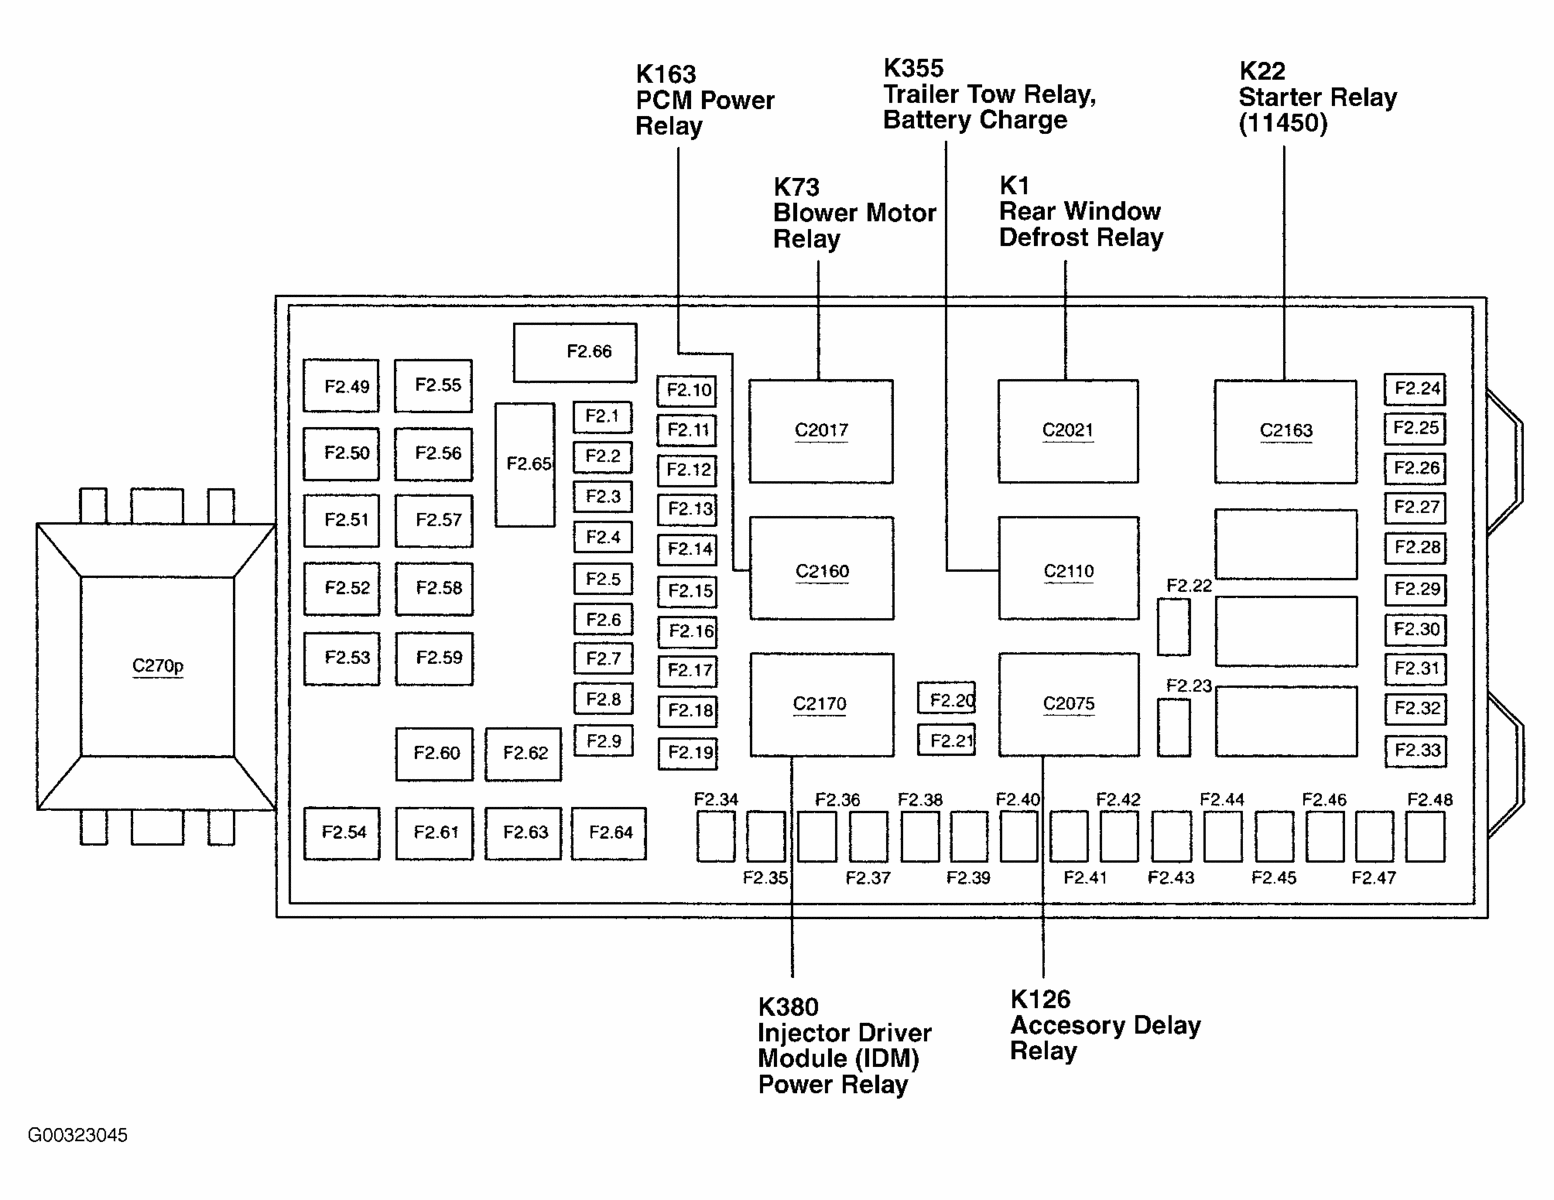 2002 Ford powerstroke fuse box diagram #4